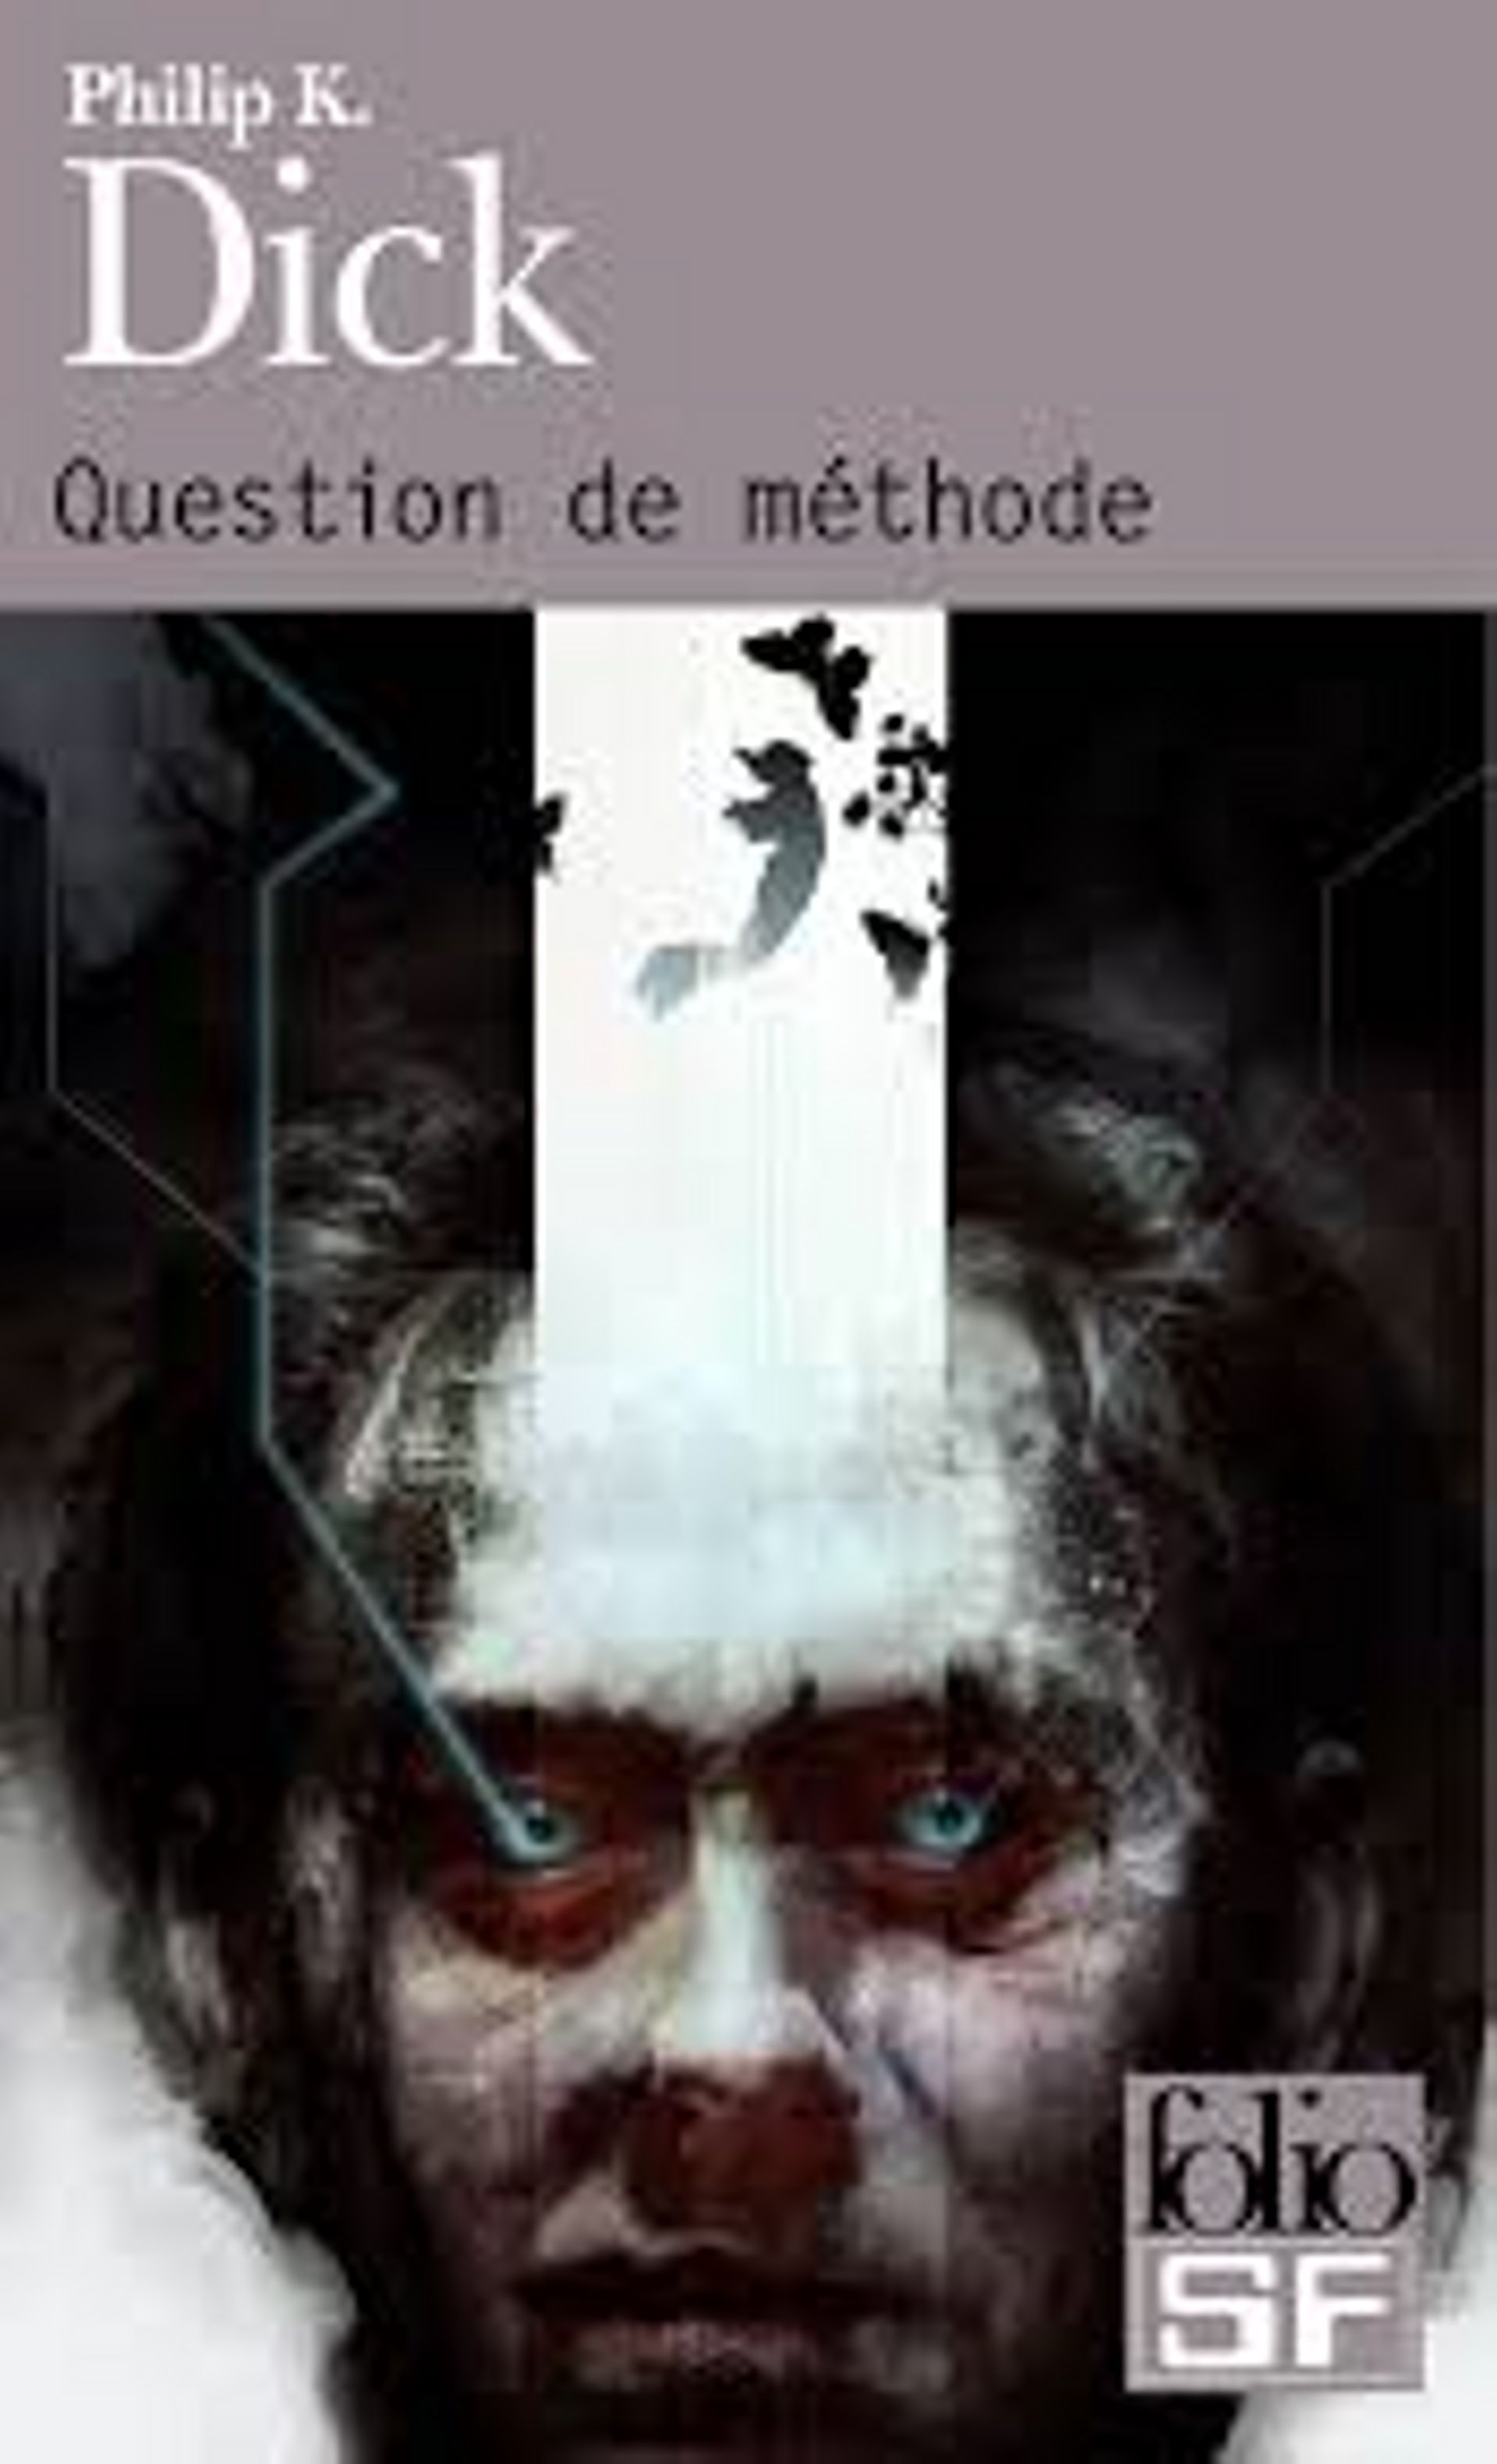  "Question de méthode" de Philip K Dick - Ed Folio SF